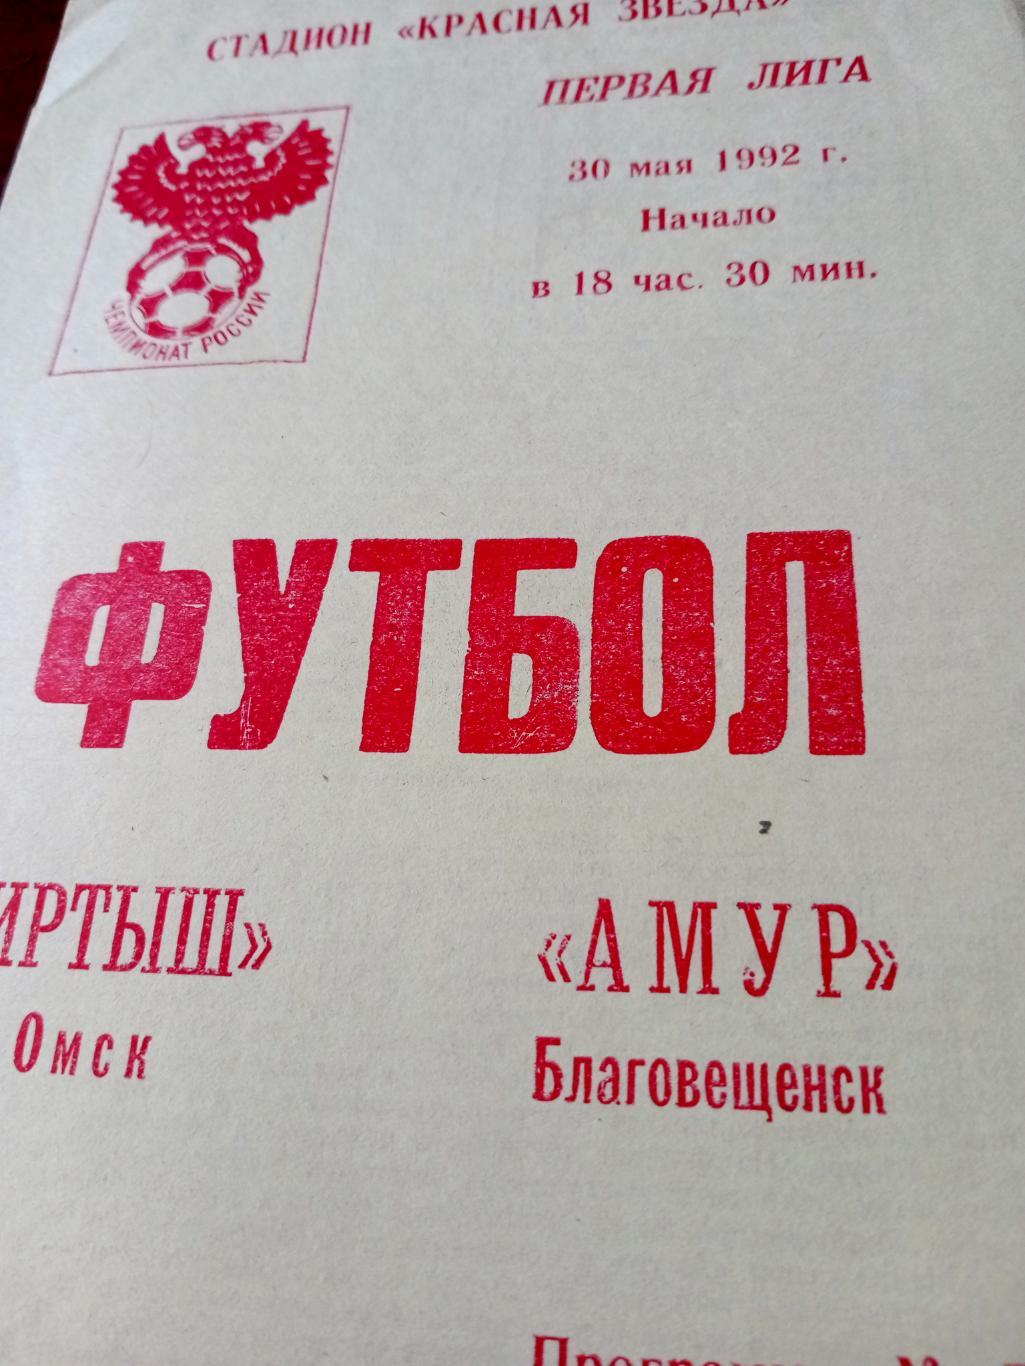 Иртыш Омск - Амур Благовещенск. 30 мая 1992 год